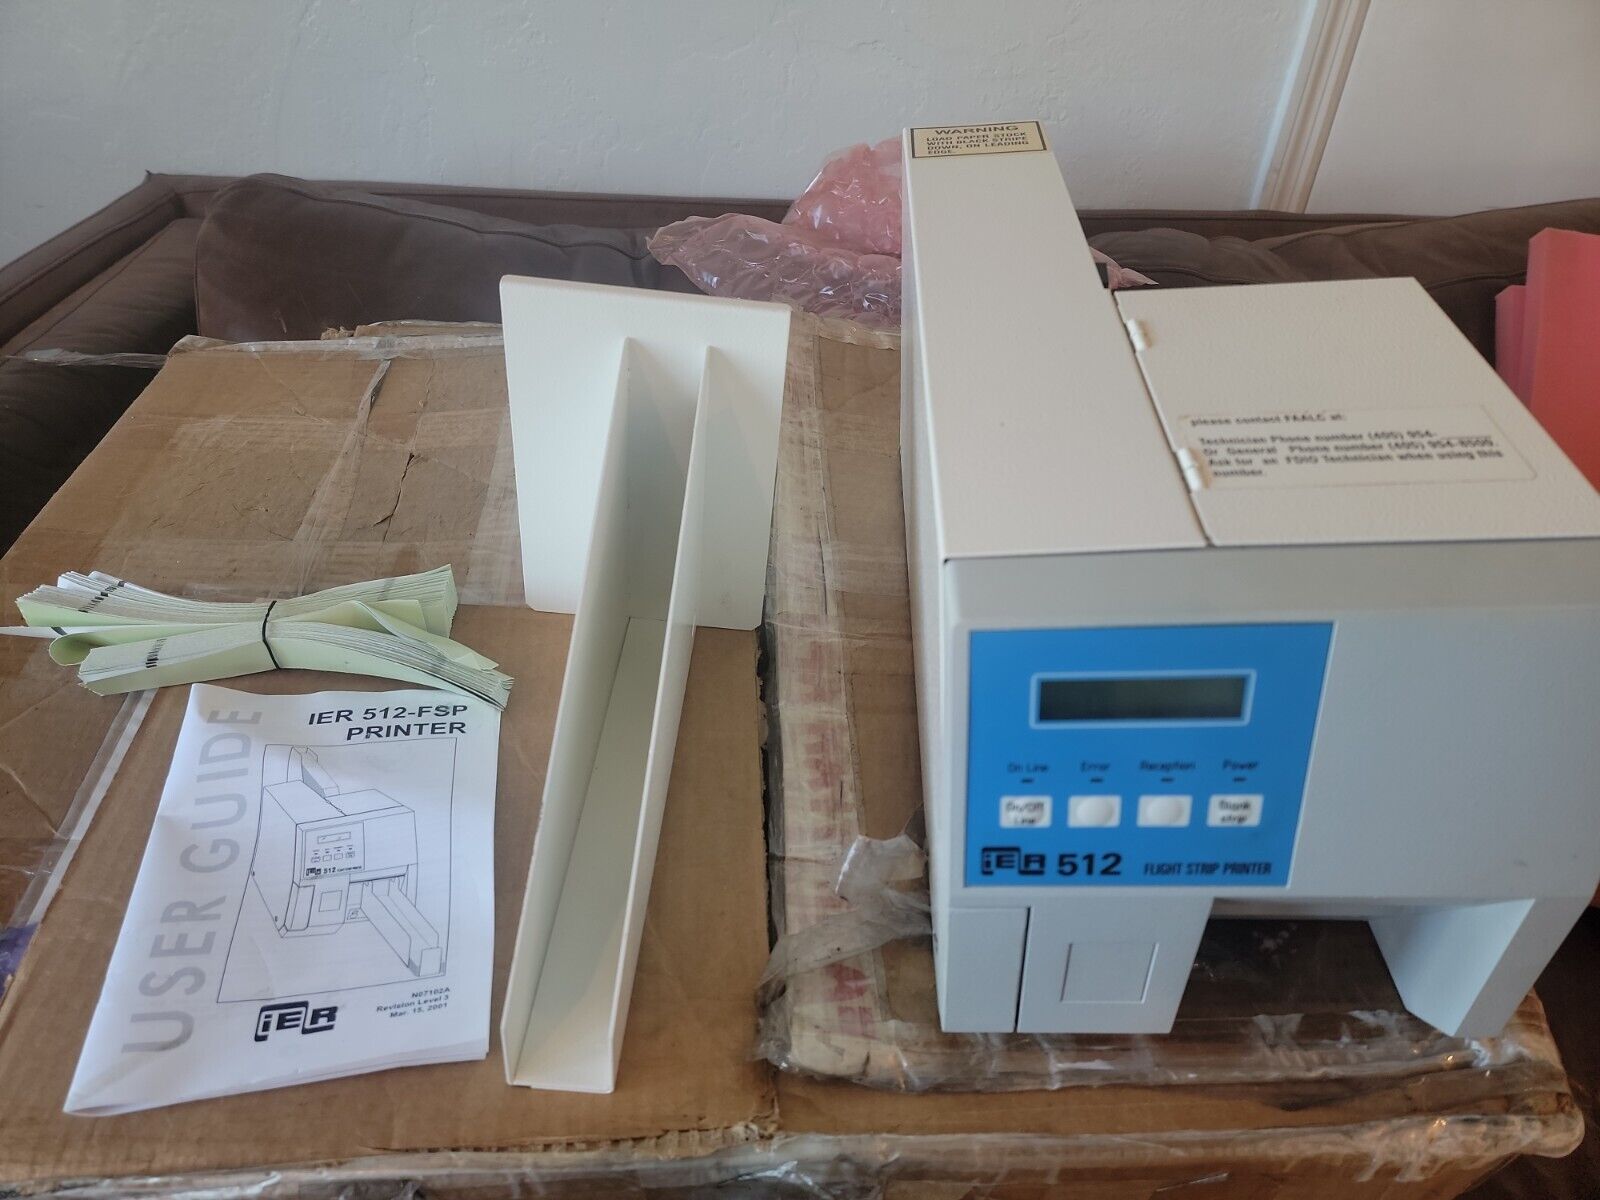 IER512 Flight Strip Printer, IER-512C-FSP, FDIO Thermal Printer, Manual Included